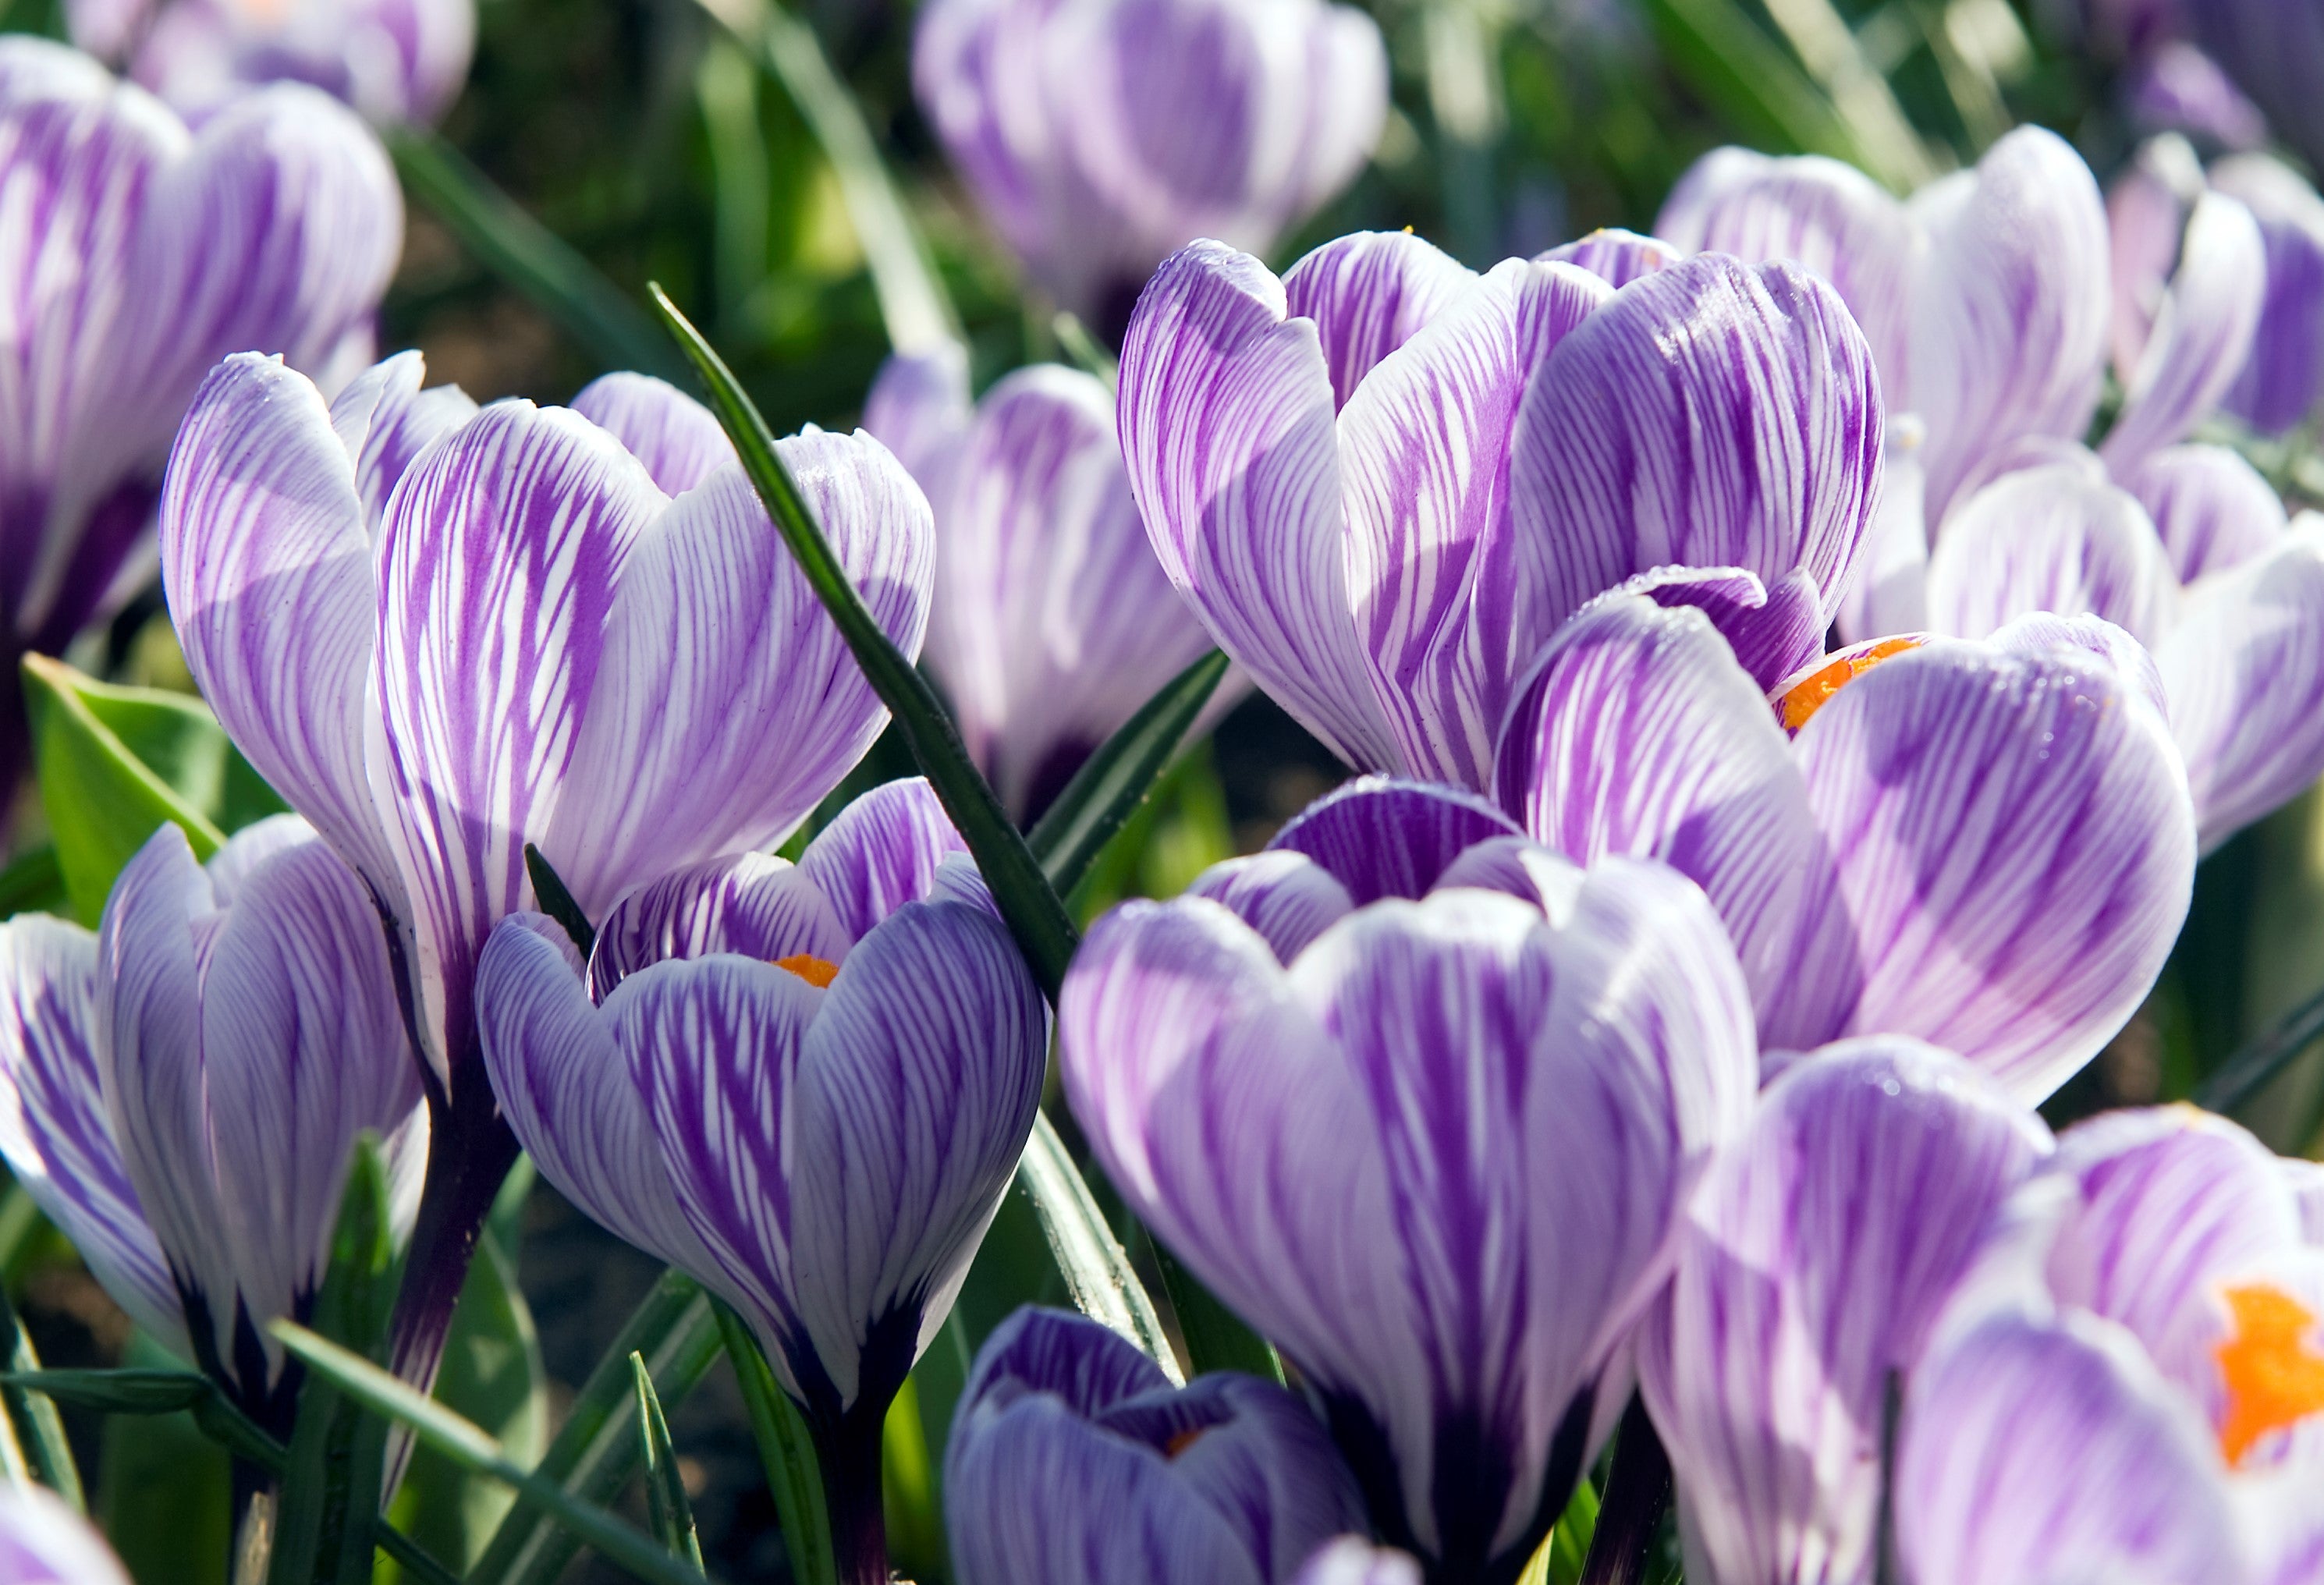 Striking purple-white Pickwick crocus, a beautiful harbinger of spring's arrival